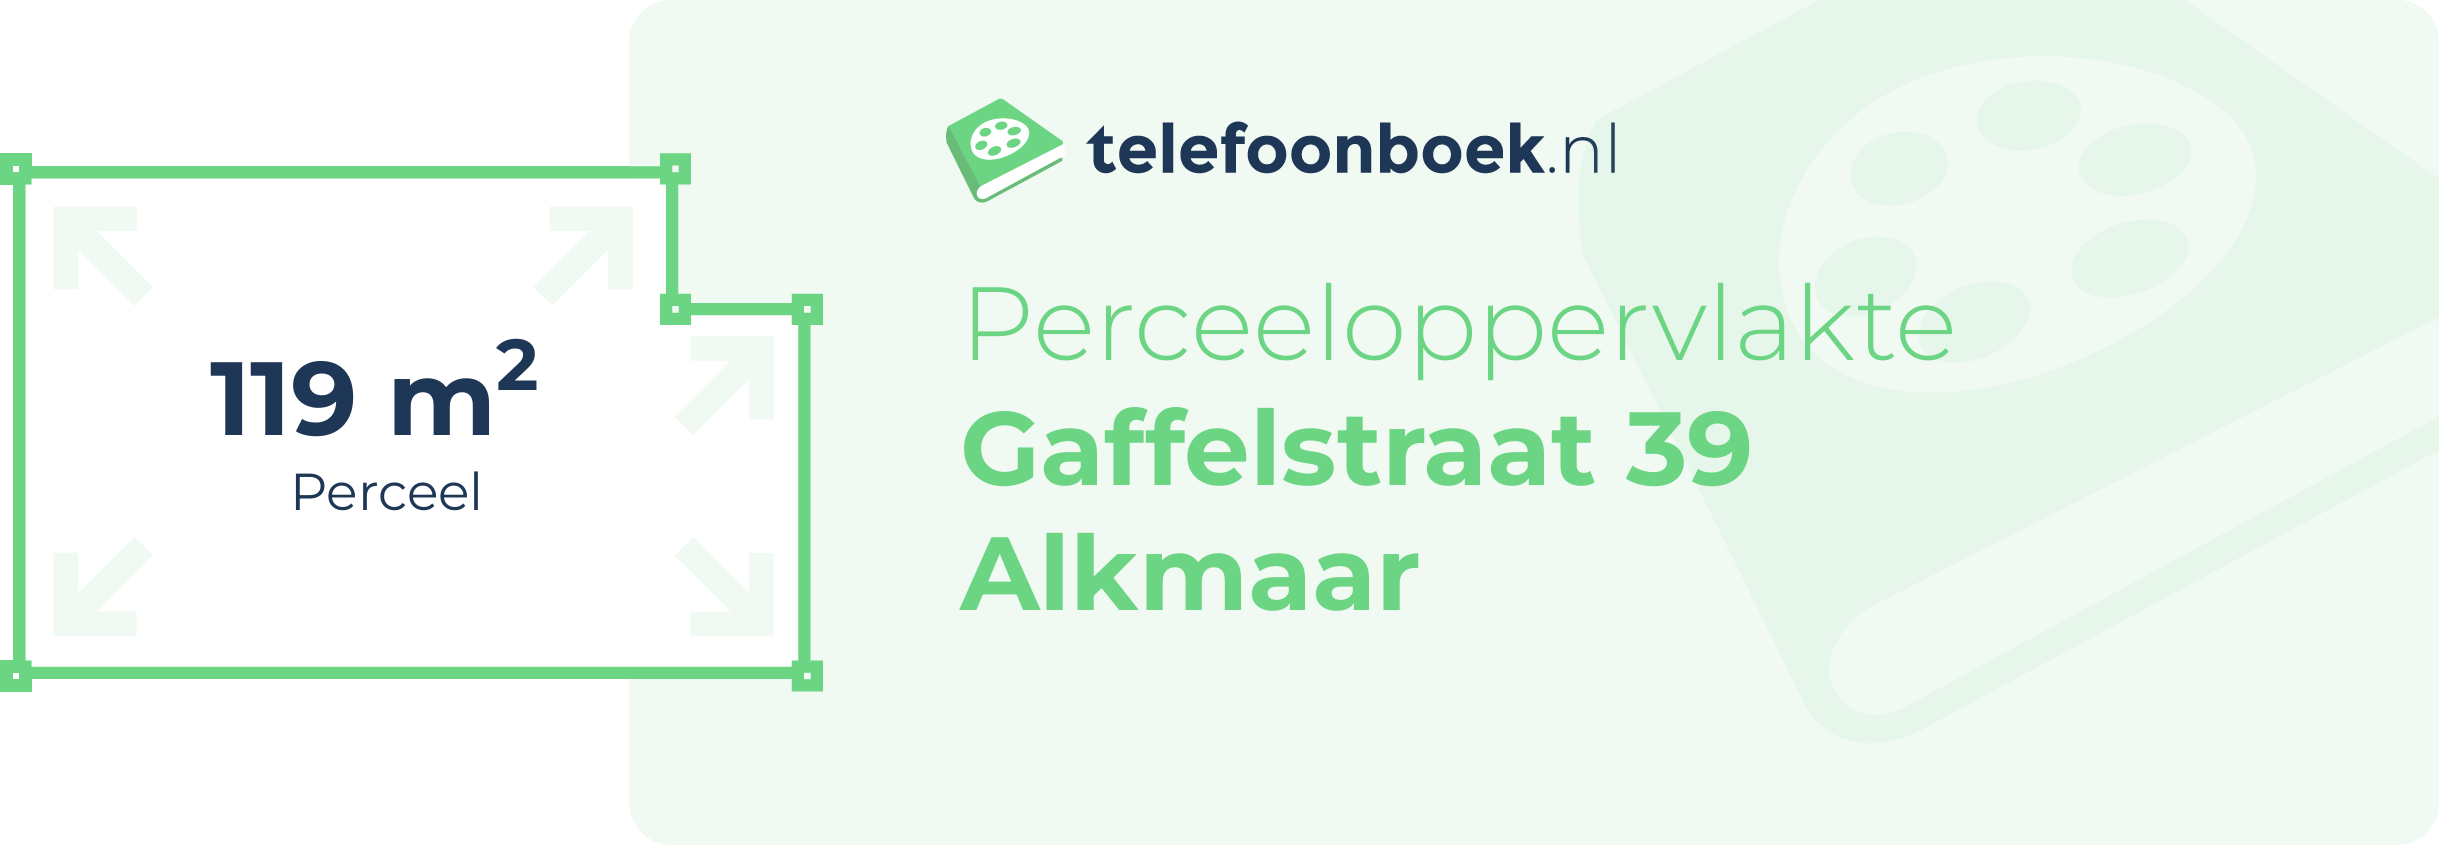 Perceeloppervlakte Gaffelstraat 39 Alkmaar